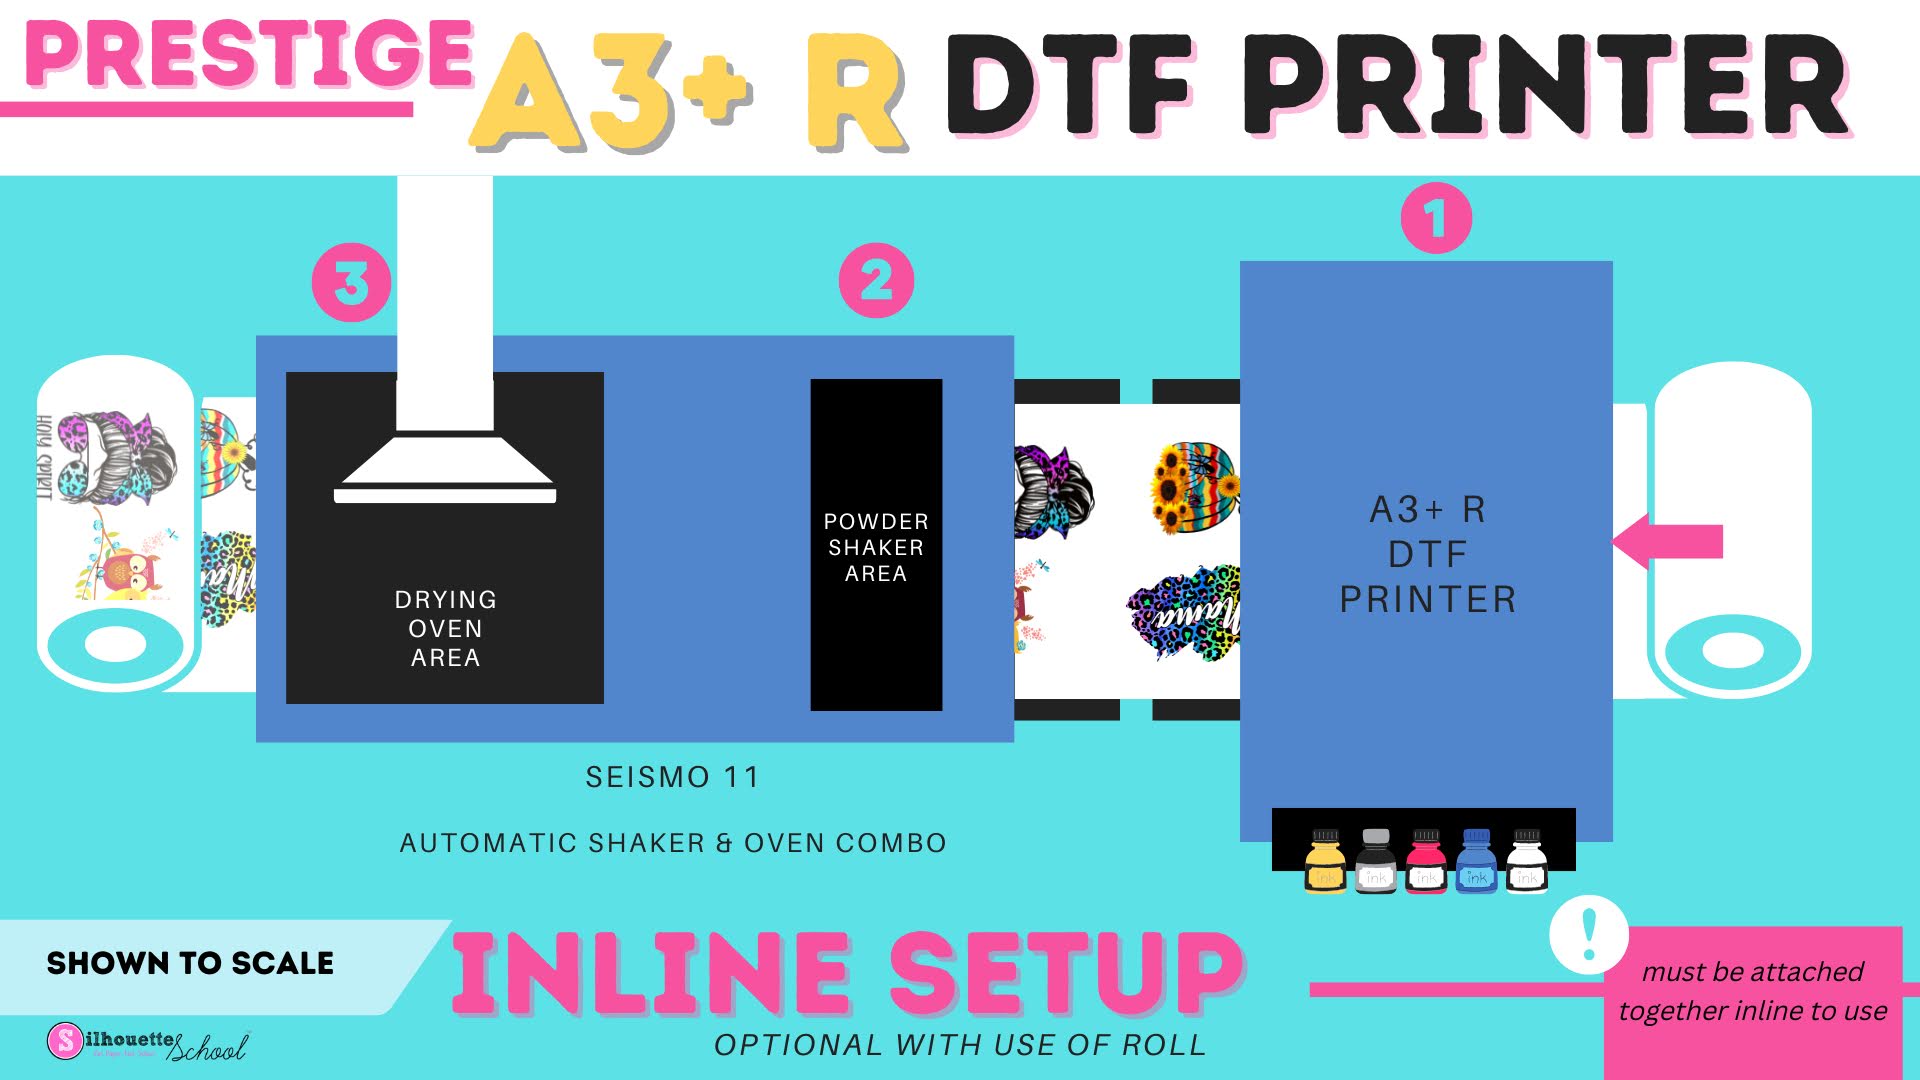 prestige a3+, dtf printer, direct to film, dtf, Prestige A3+ R